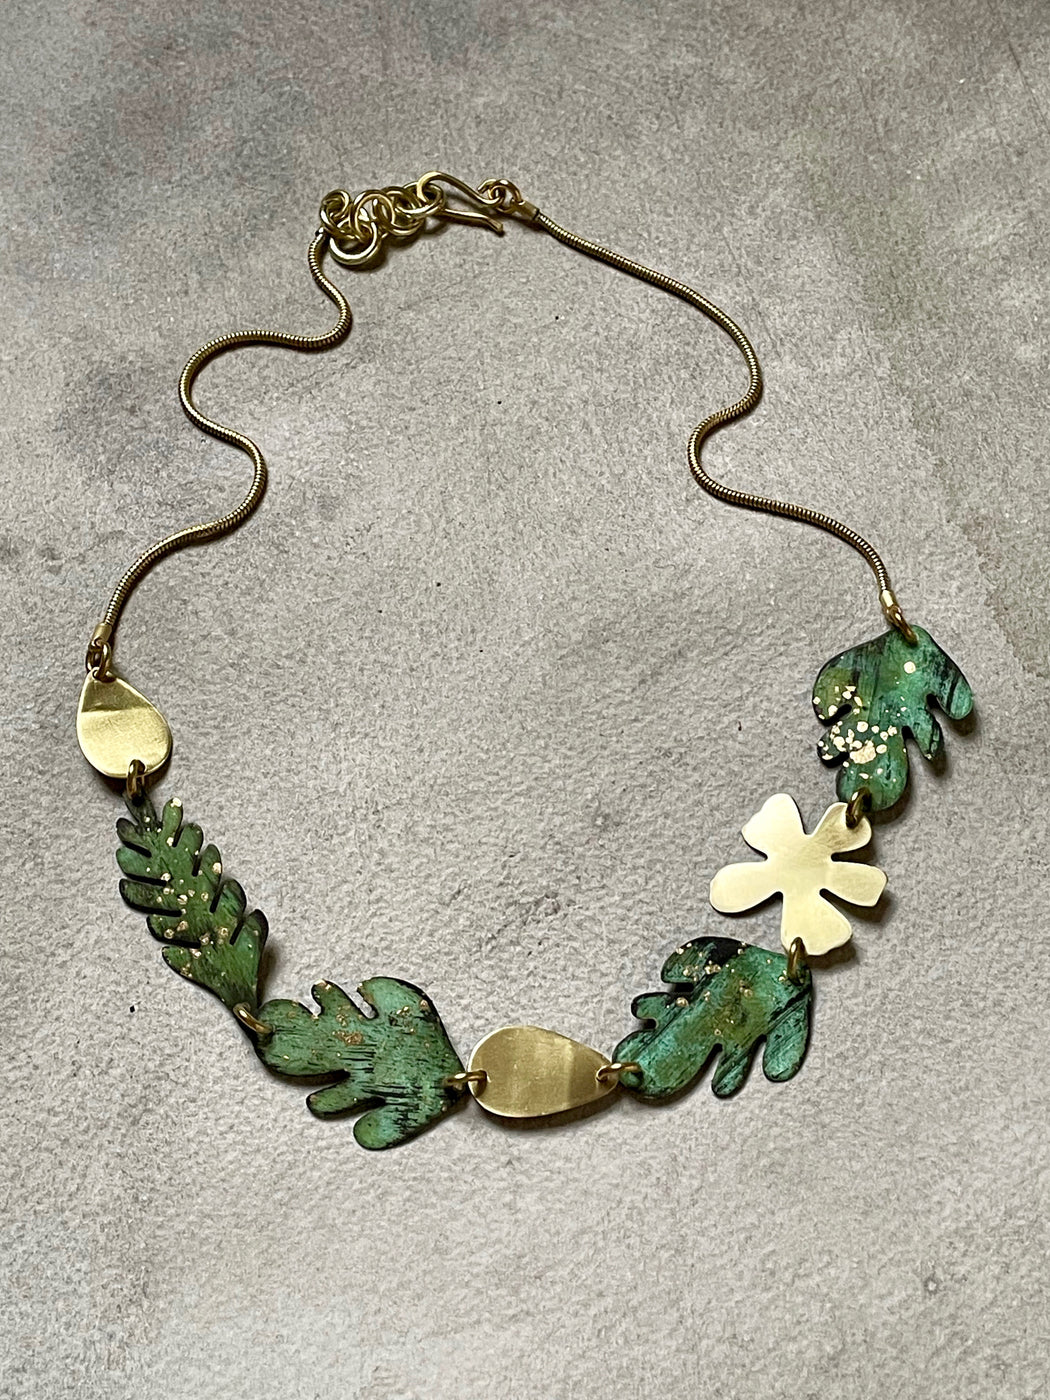 Sibilia "Botanica" Necklace